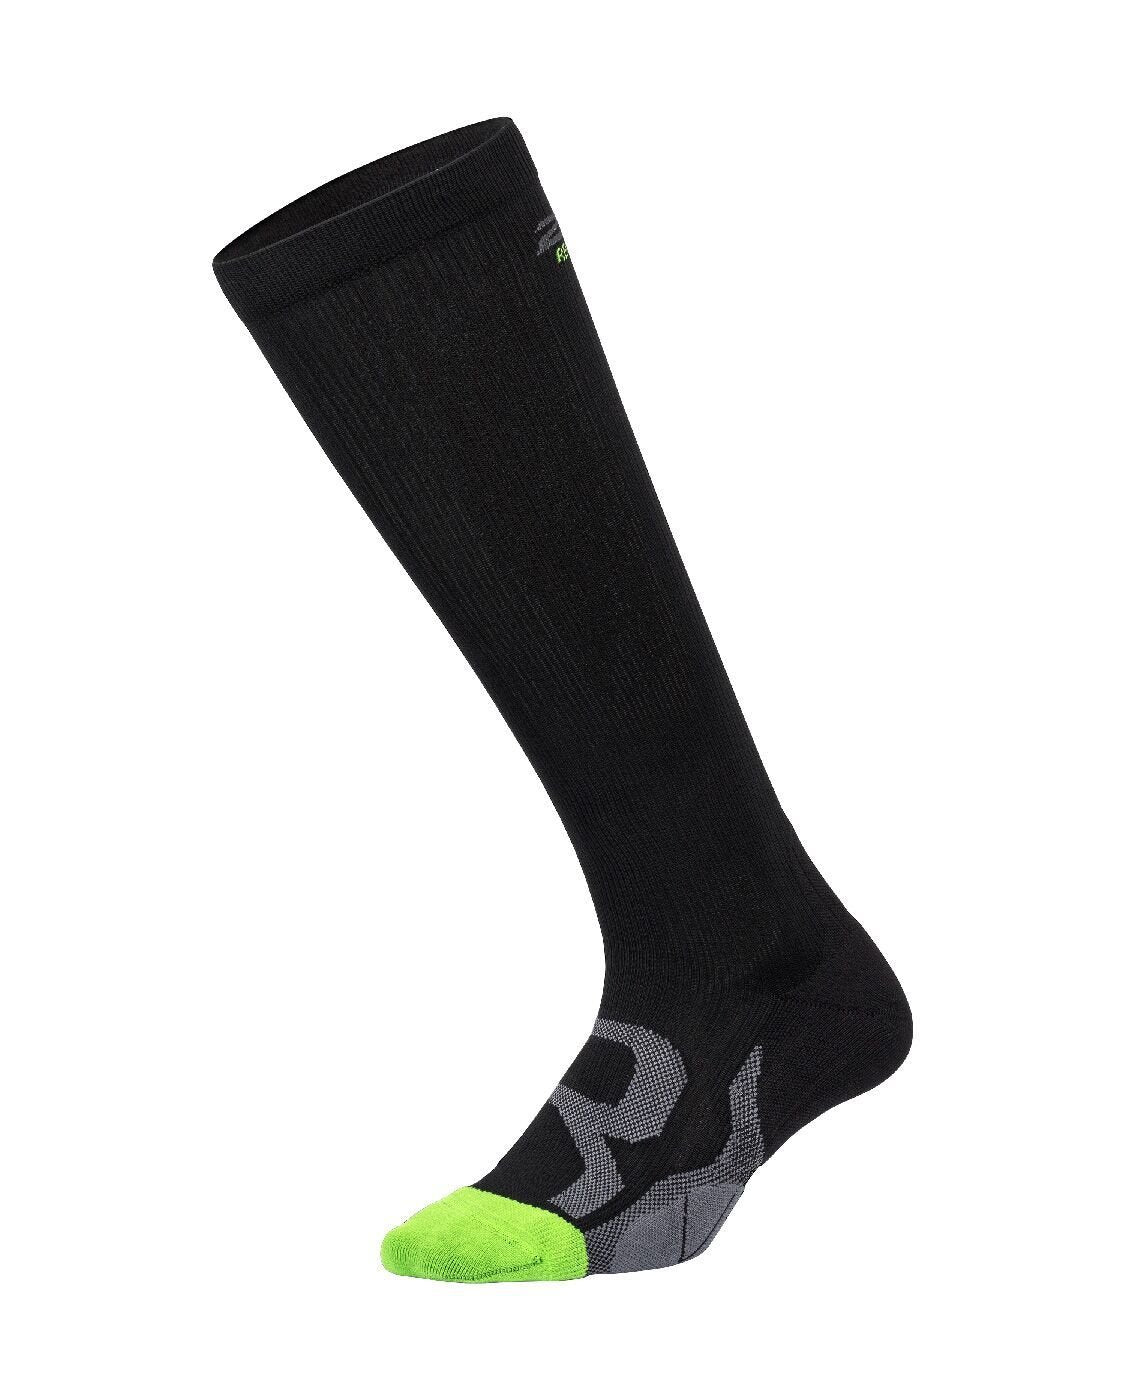 2XU SA - Compression Socks For Recovery - Black/Grey